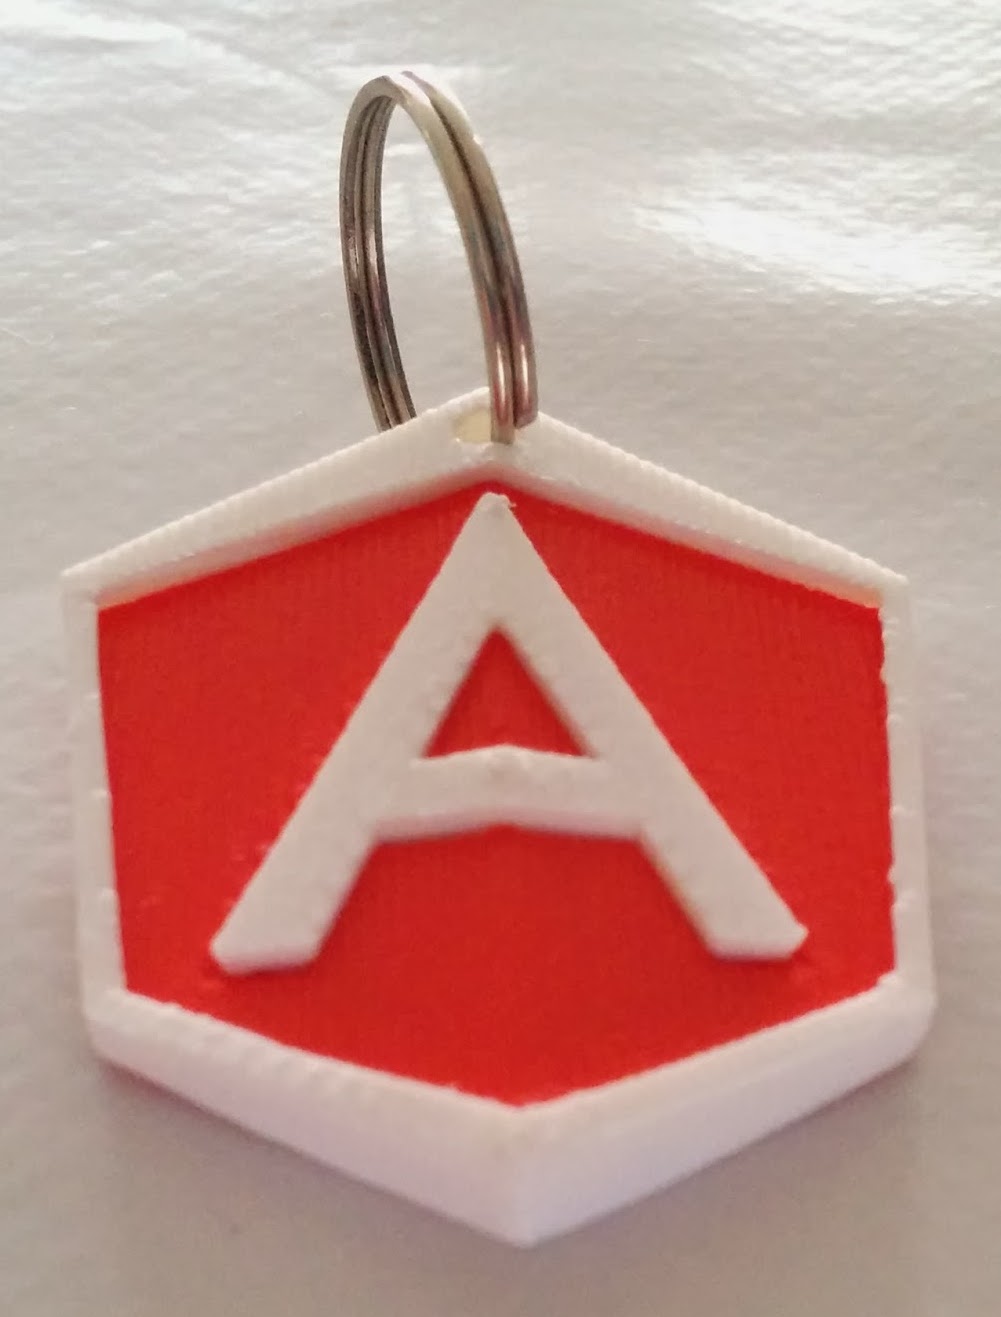 AngularJS logo keychain